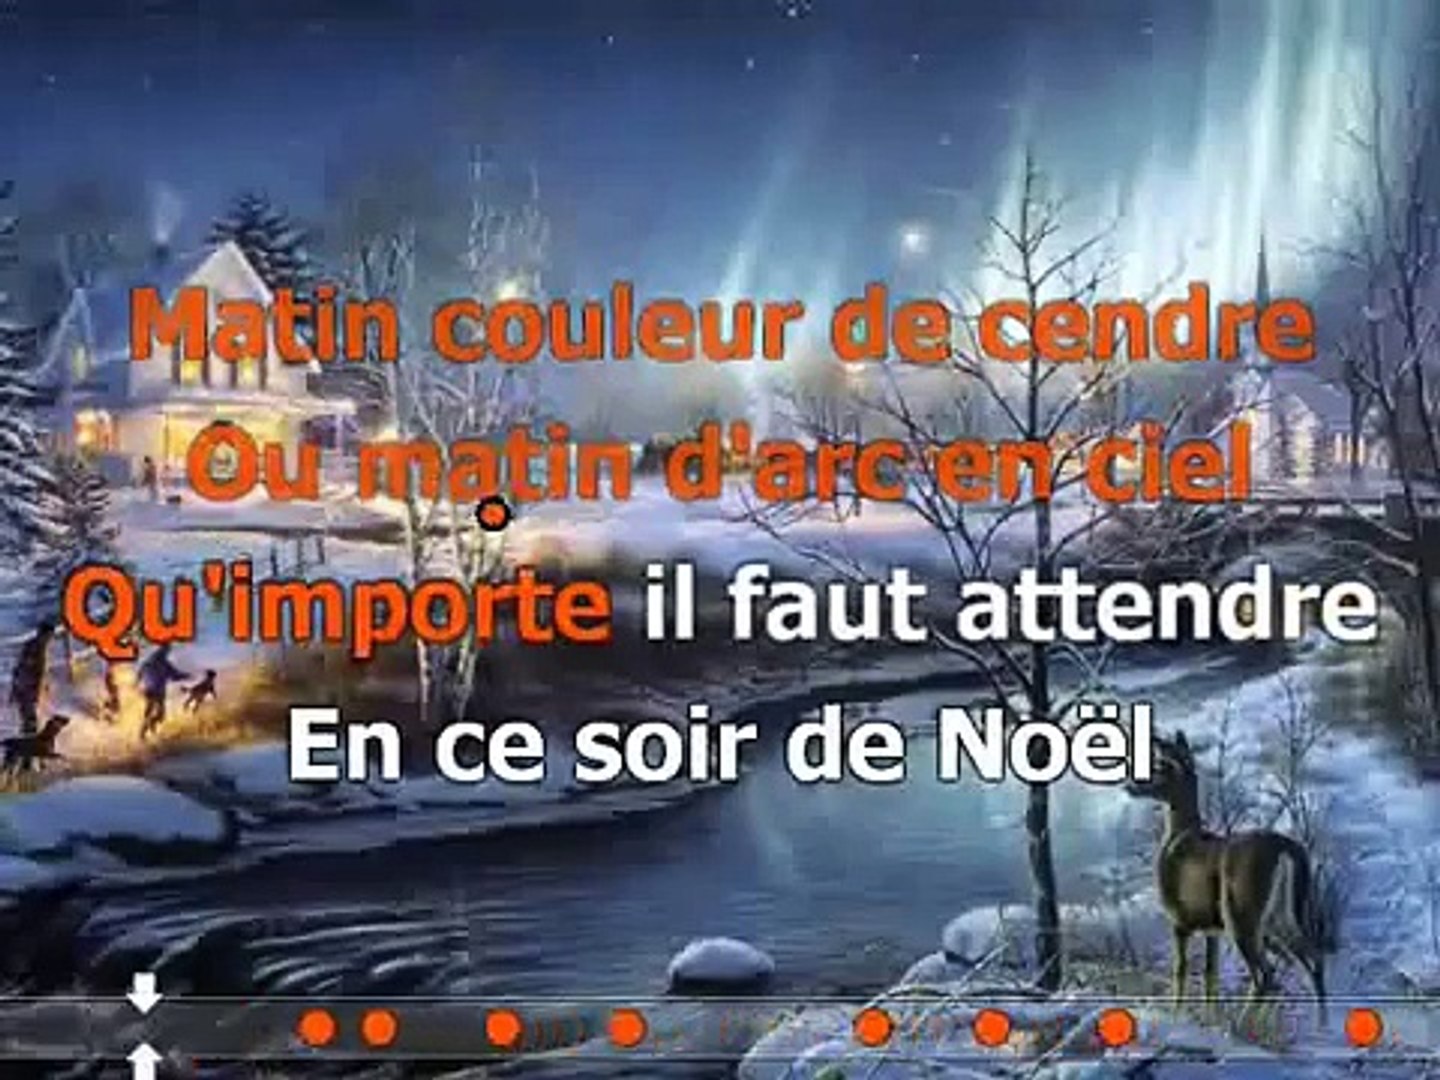 Noel des enfants du monde (soprano) - Dailymotion Video